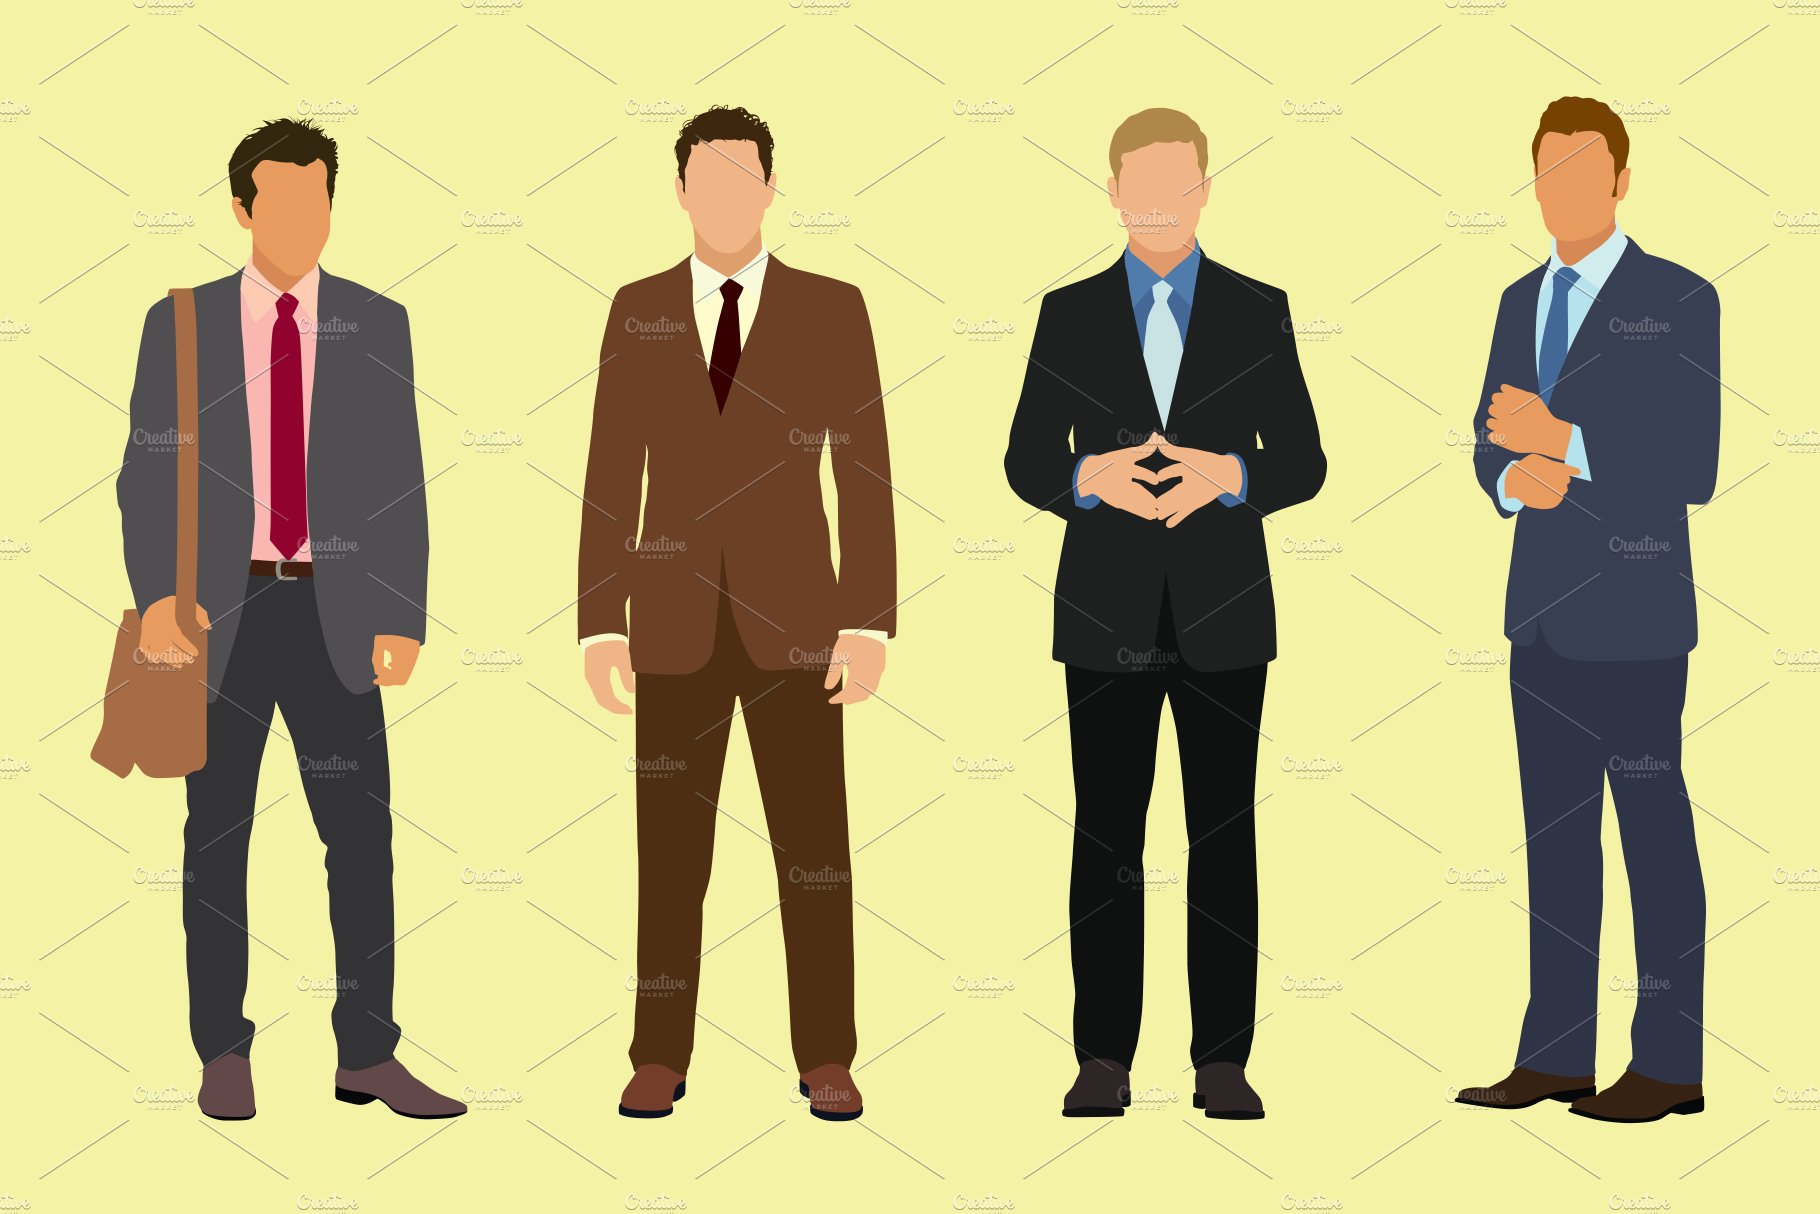 Caucasian Business Men in Suits cover image.